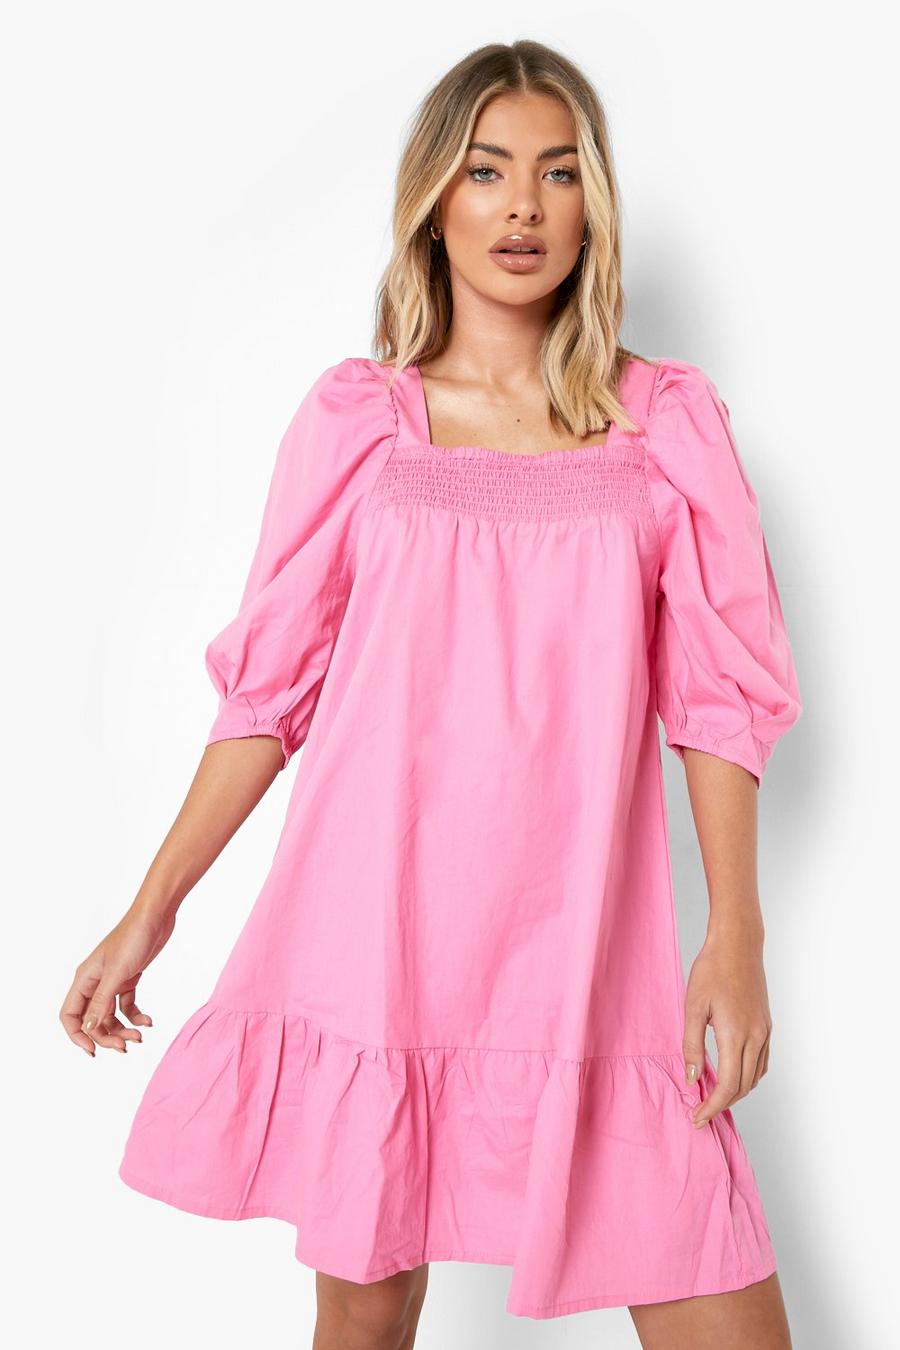 Pink Gingham Dress, Vintage Cotton Dress, Puff Sleeve Smock Dress, Shirred  Babydoll Dress, Sun Dress, Holiday Party Dresses for Women -  Sweden